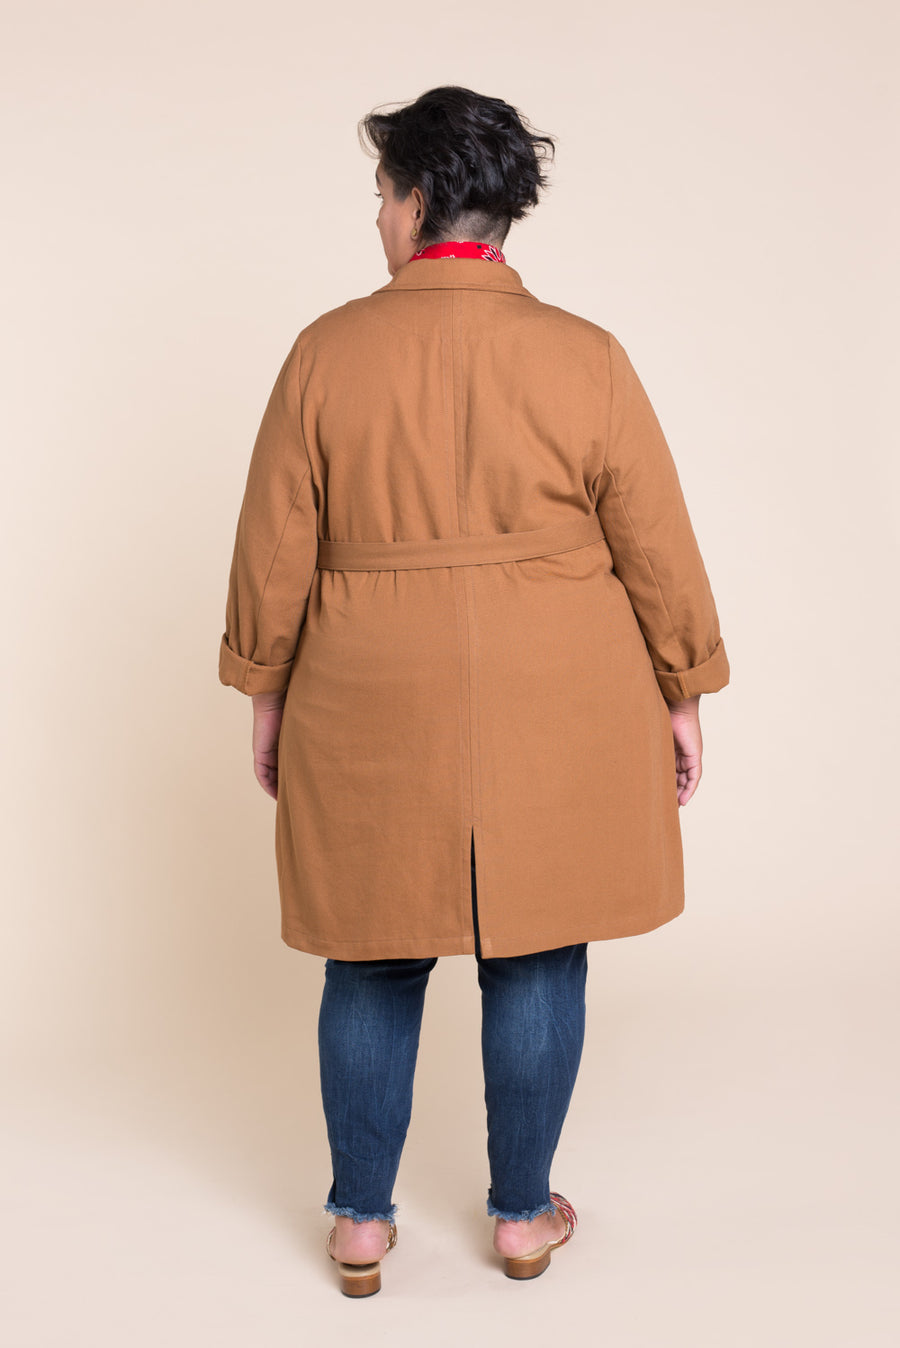 Sienna Maker Jacket Pattern - Full length // Plus size Utility and Chore Jacket Pattern // Closet Core Patterns